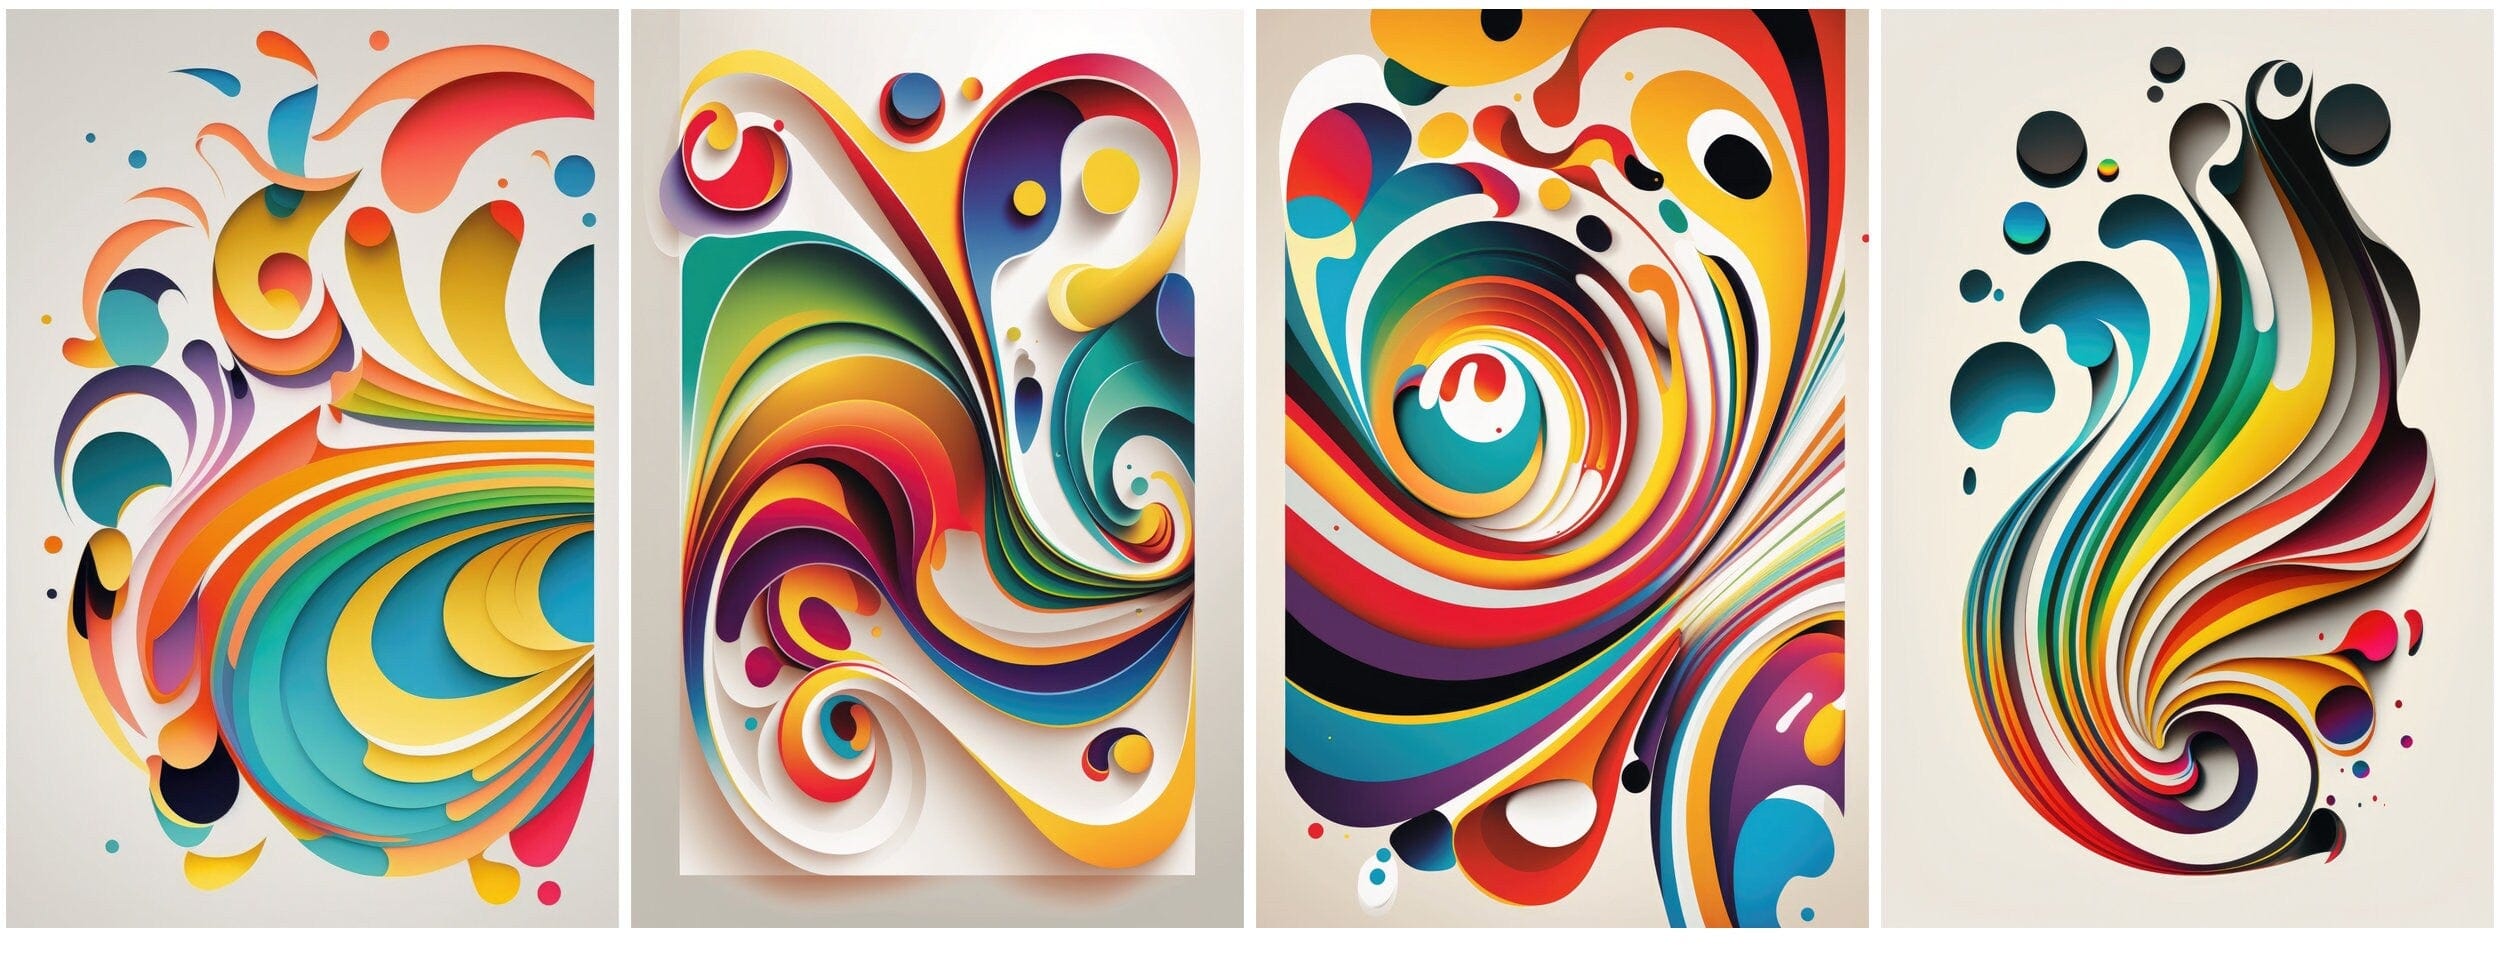 Pastel art geometric wavy swirls background | 100 Stunning Pastel Geometric Swirls Instant Download, Commercial use Digital Download Sumobundle